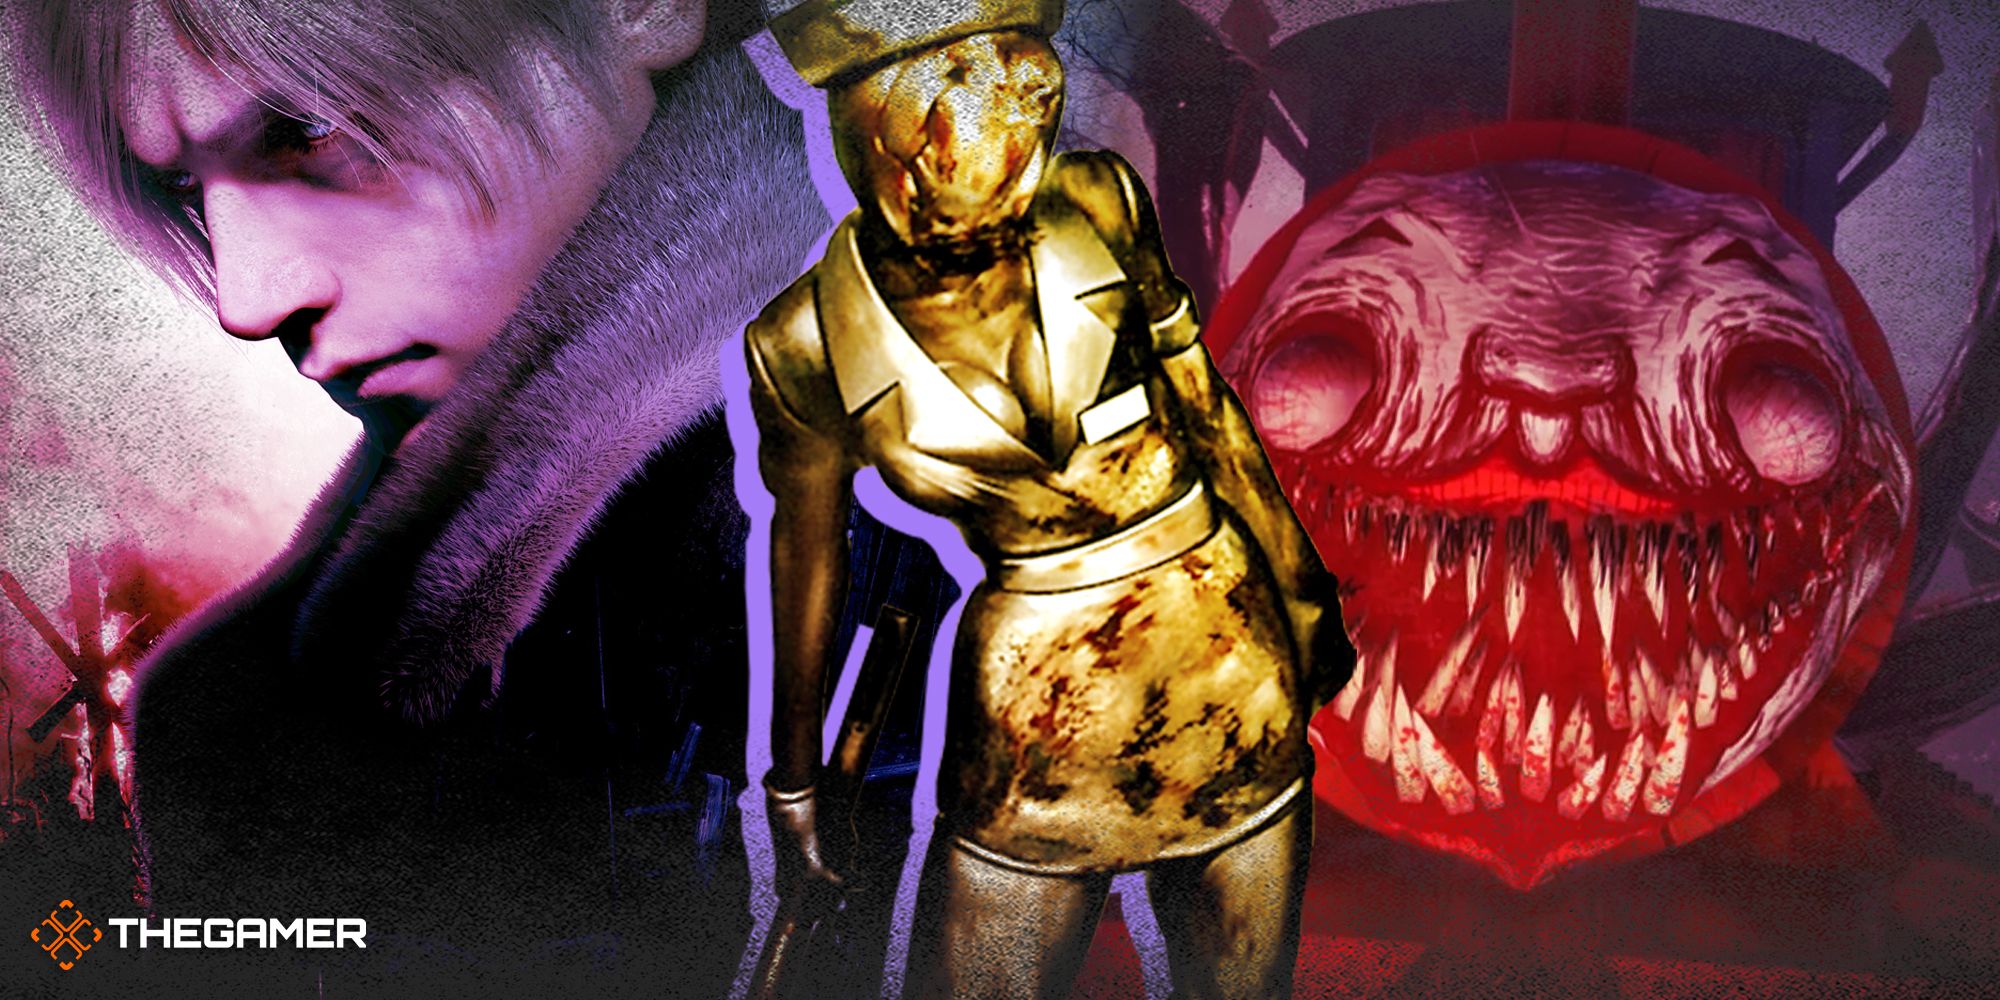 11 Best Free Horror Games on Steam